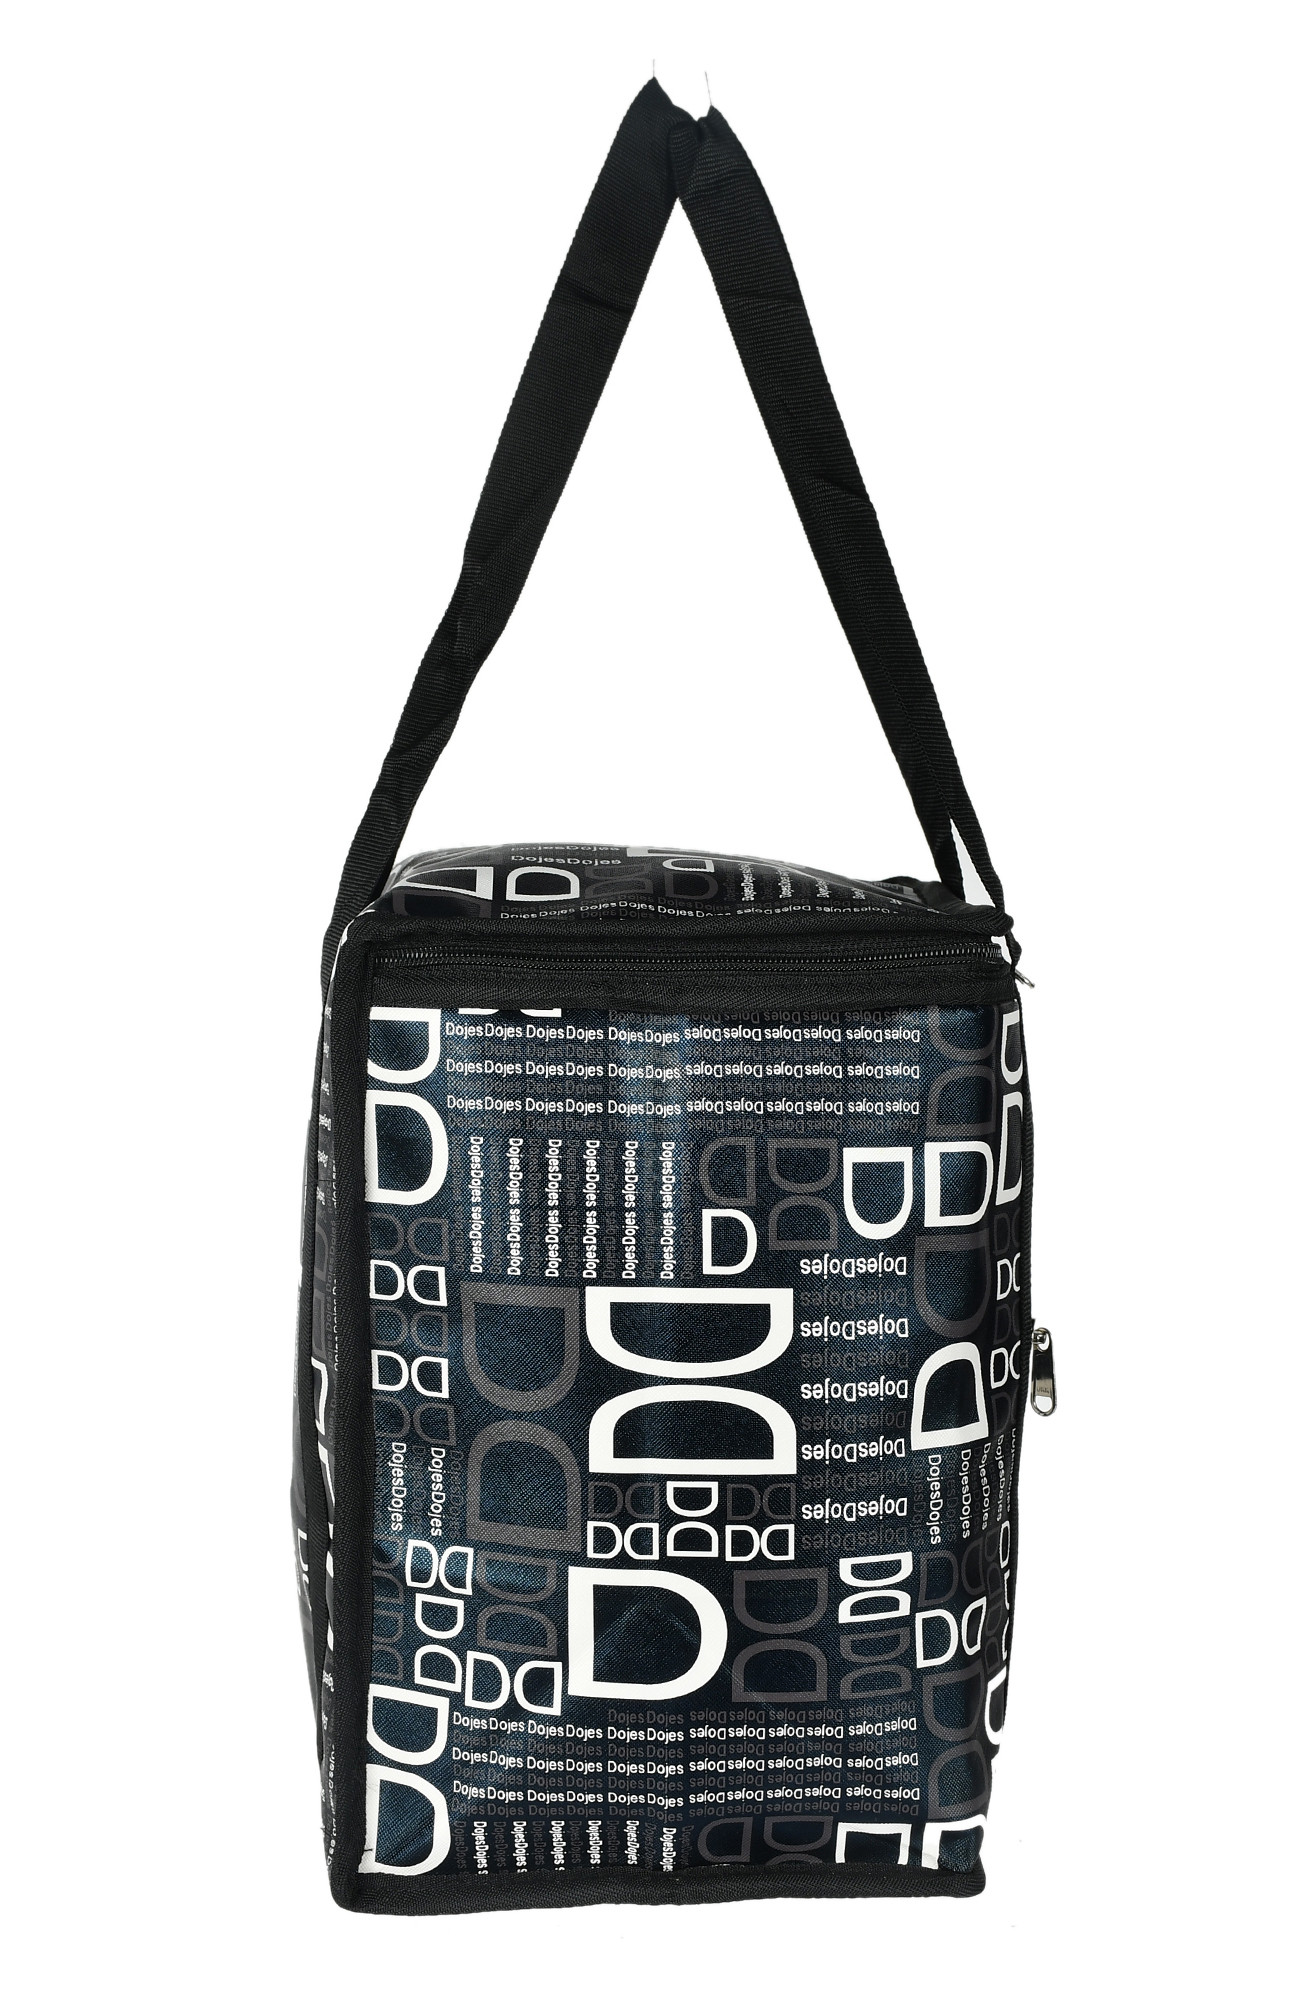 Kuber Industries D Printed Rexien Lunch Bag Lunch Tote Bag for Men & Women (Black)-HS_38_KUBMART21189